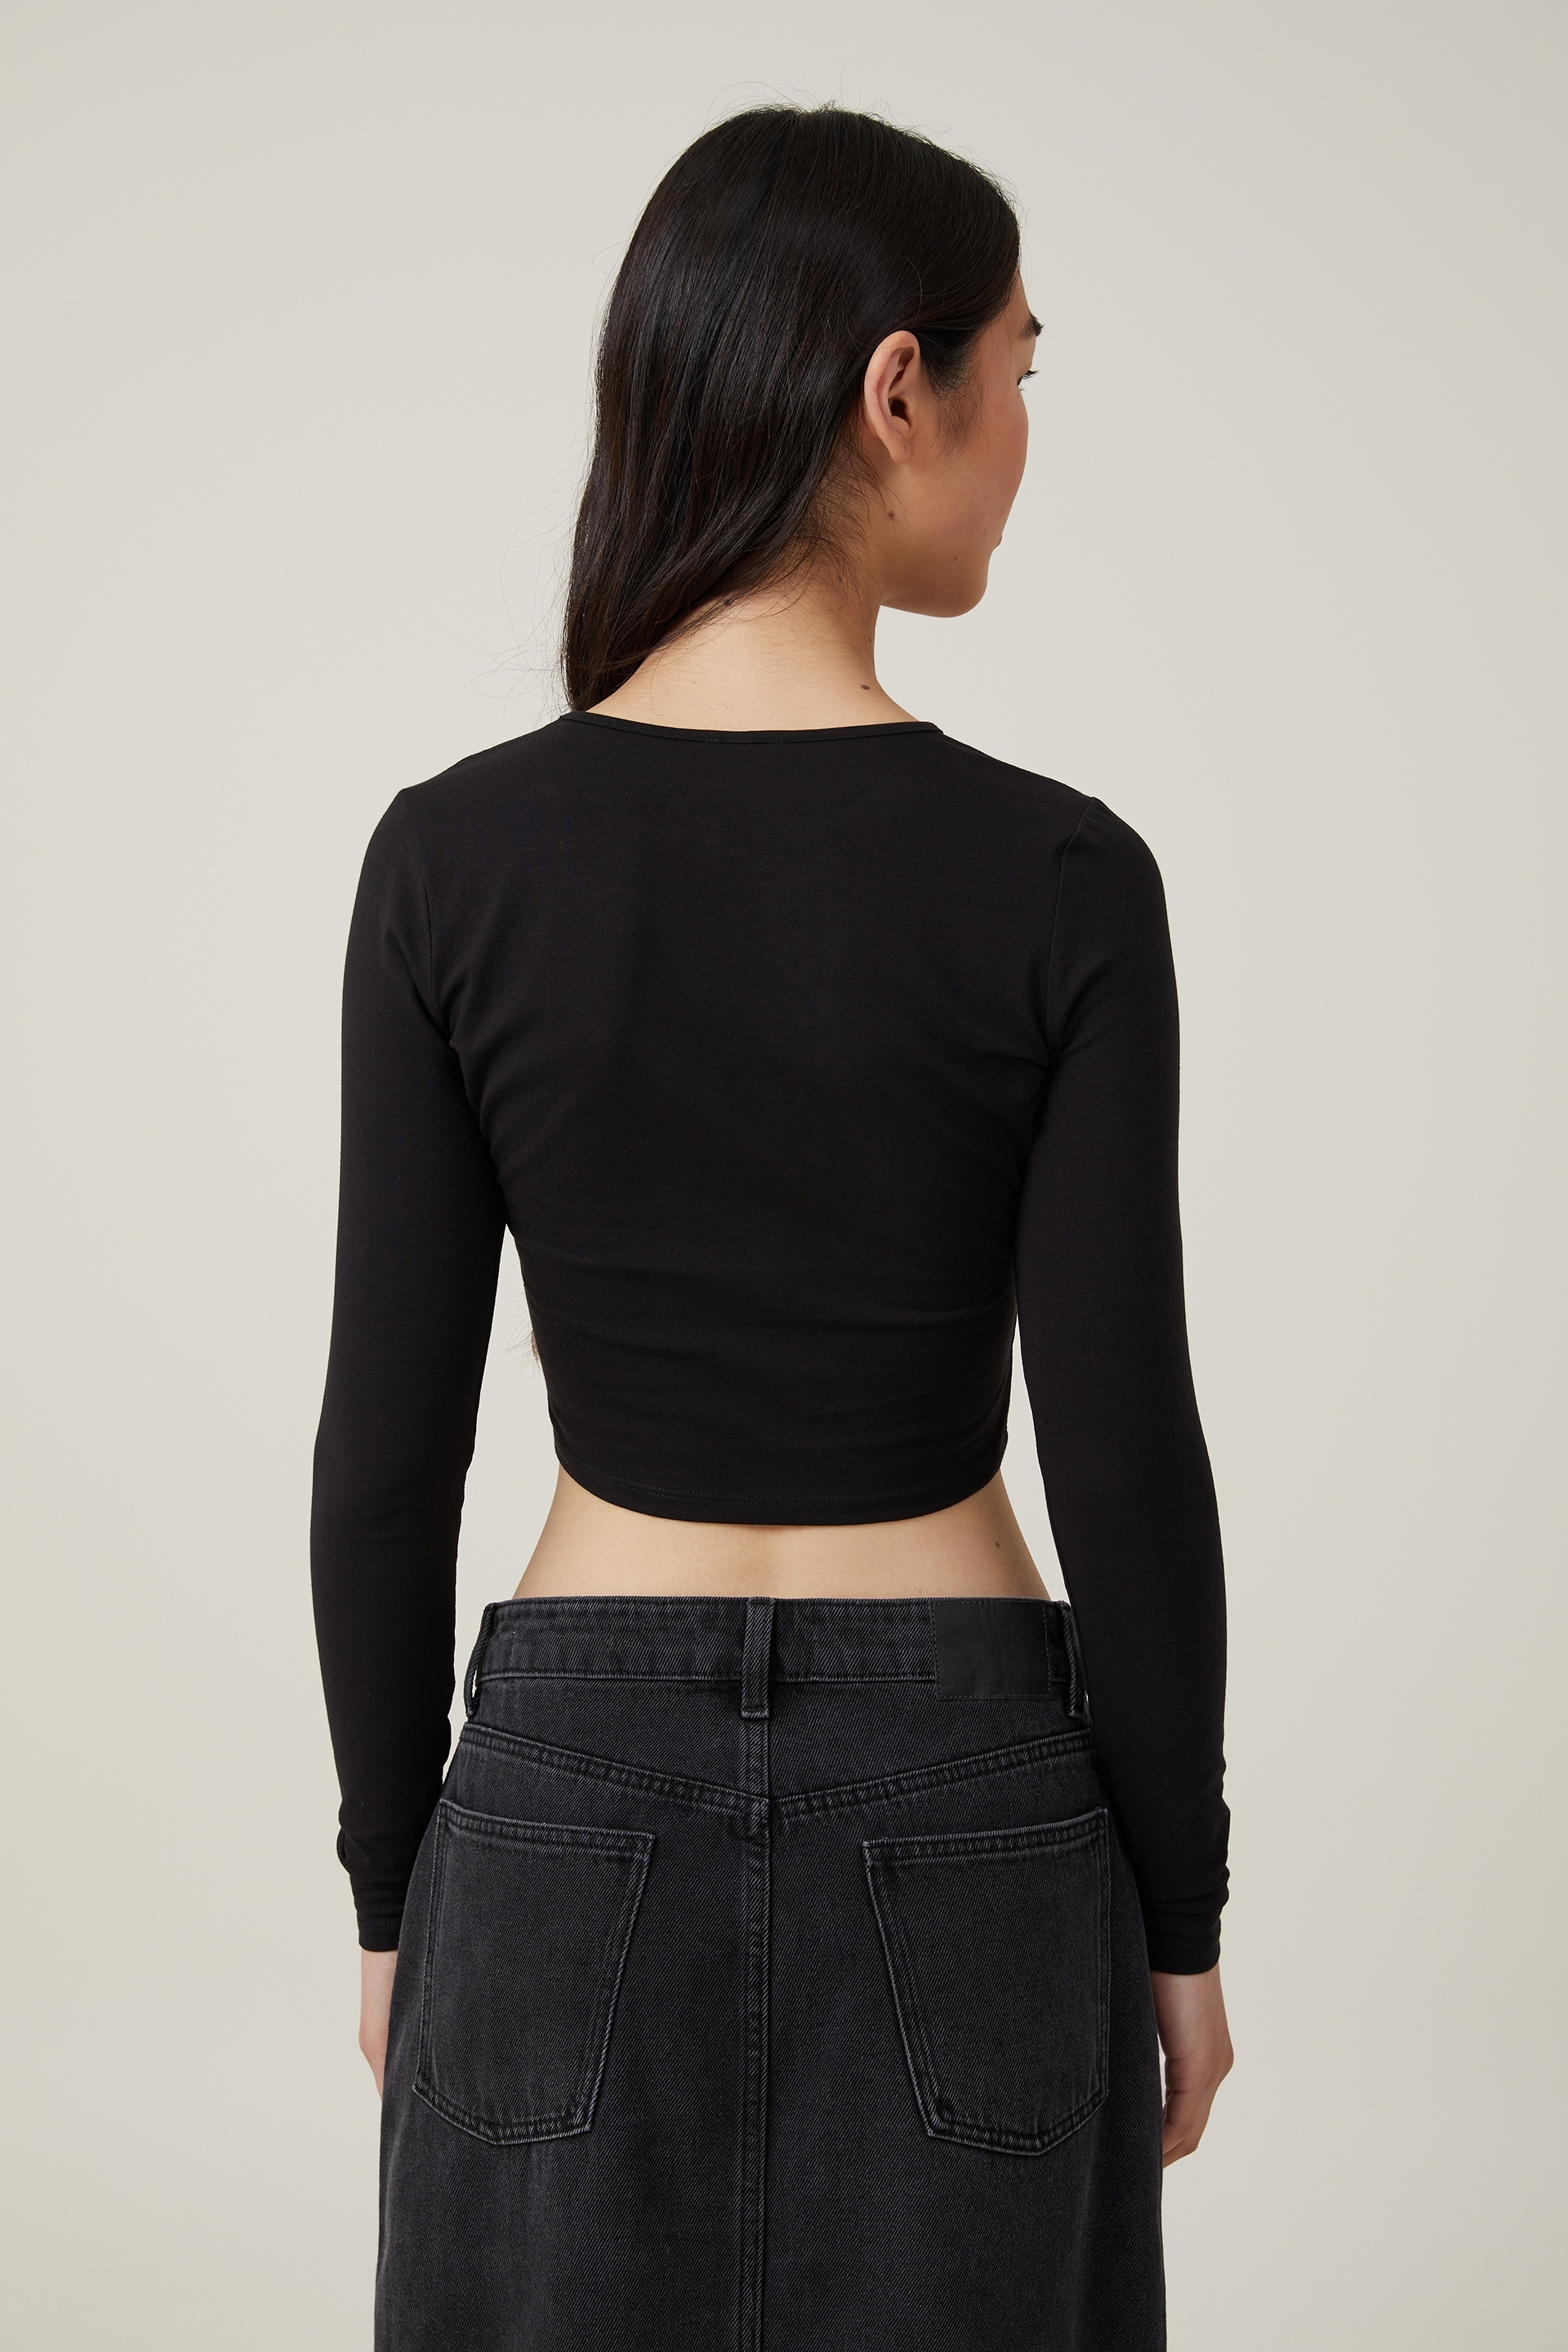 Everlast Womens Athletic Shirt Top Back Keyhole Long Sleeve Black